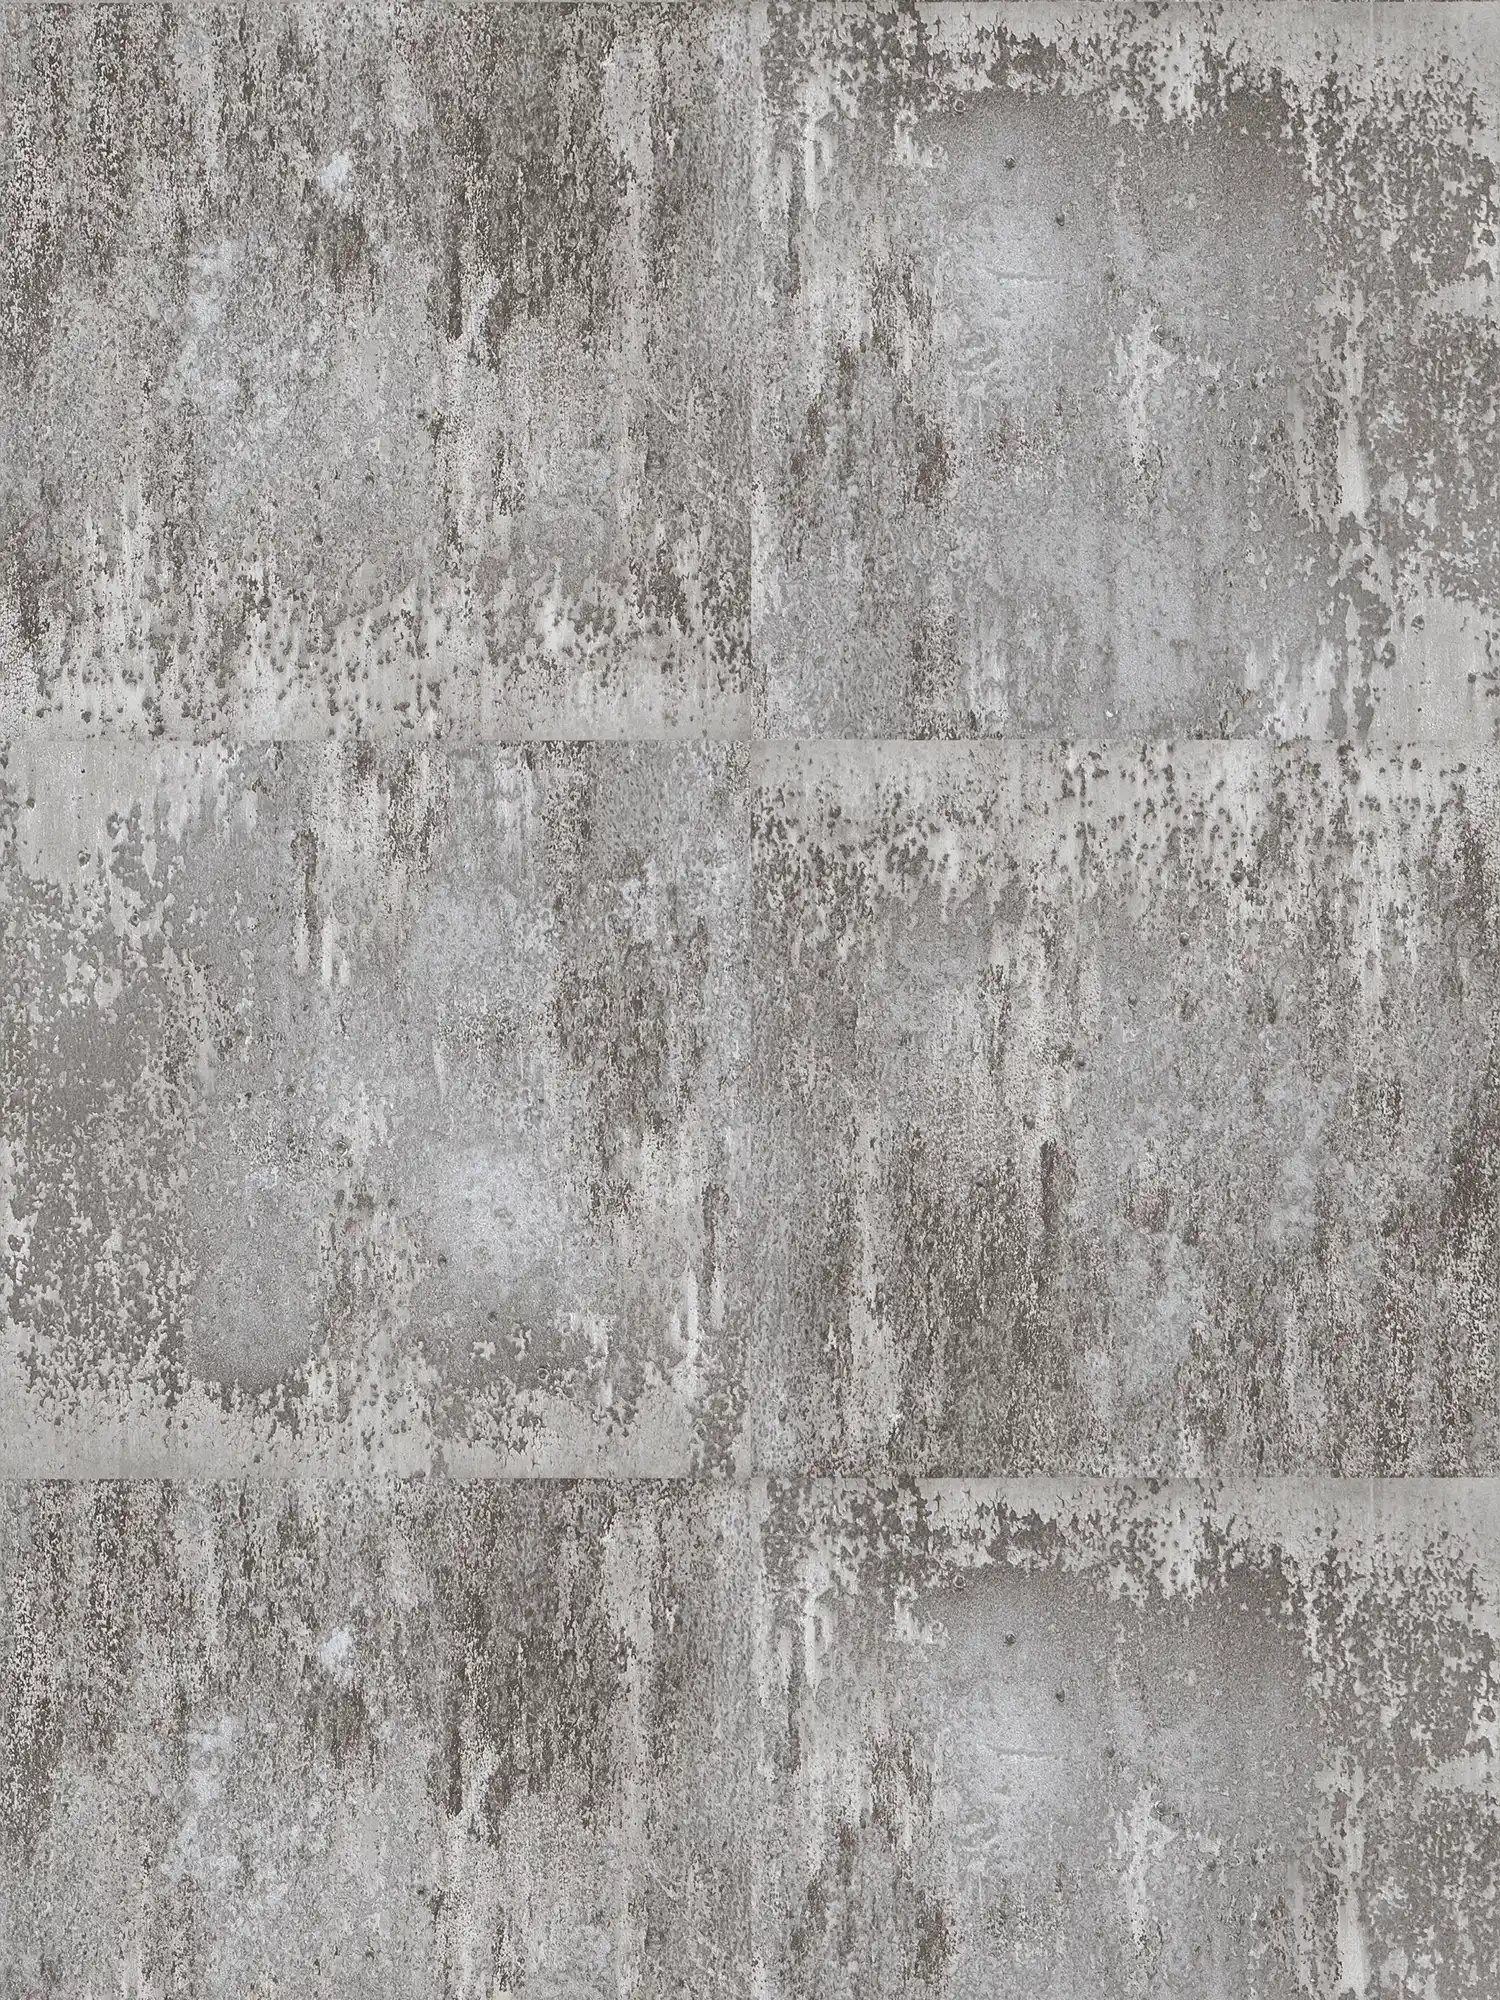 Self-adhesive wallpaper | rust look design with metallic effect - grey
